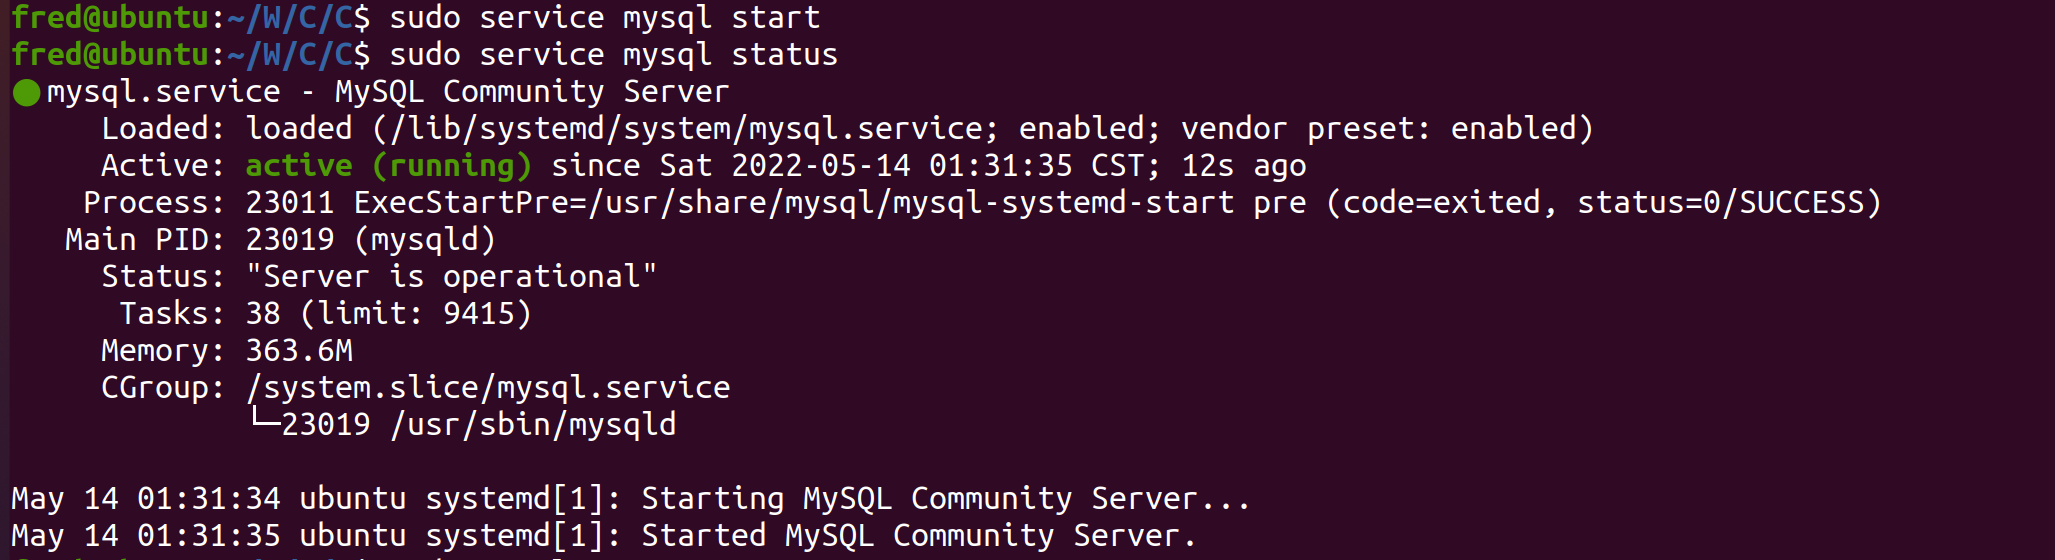 Ubuntu create database and tables in mysql